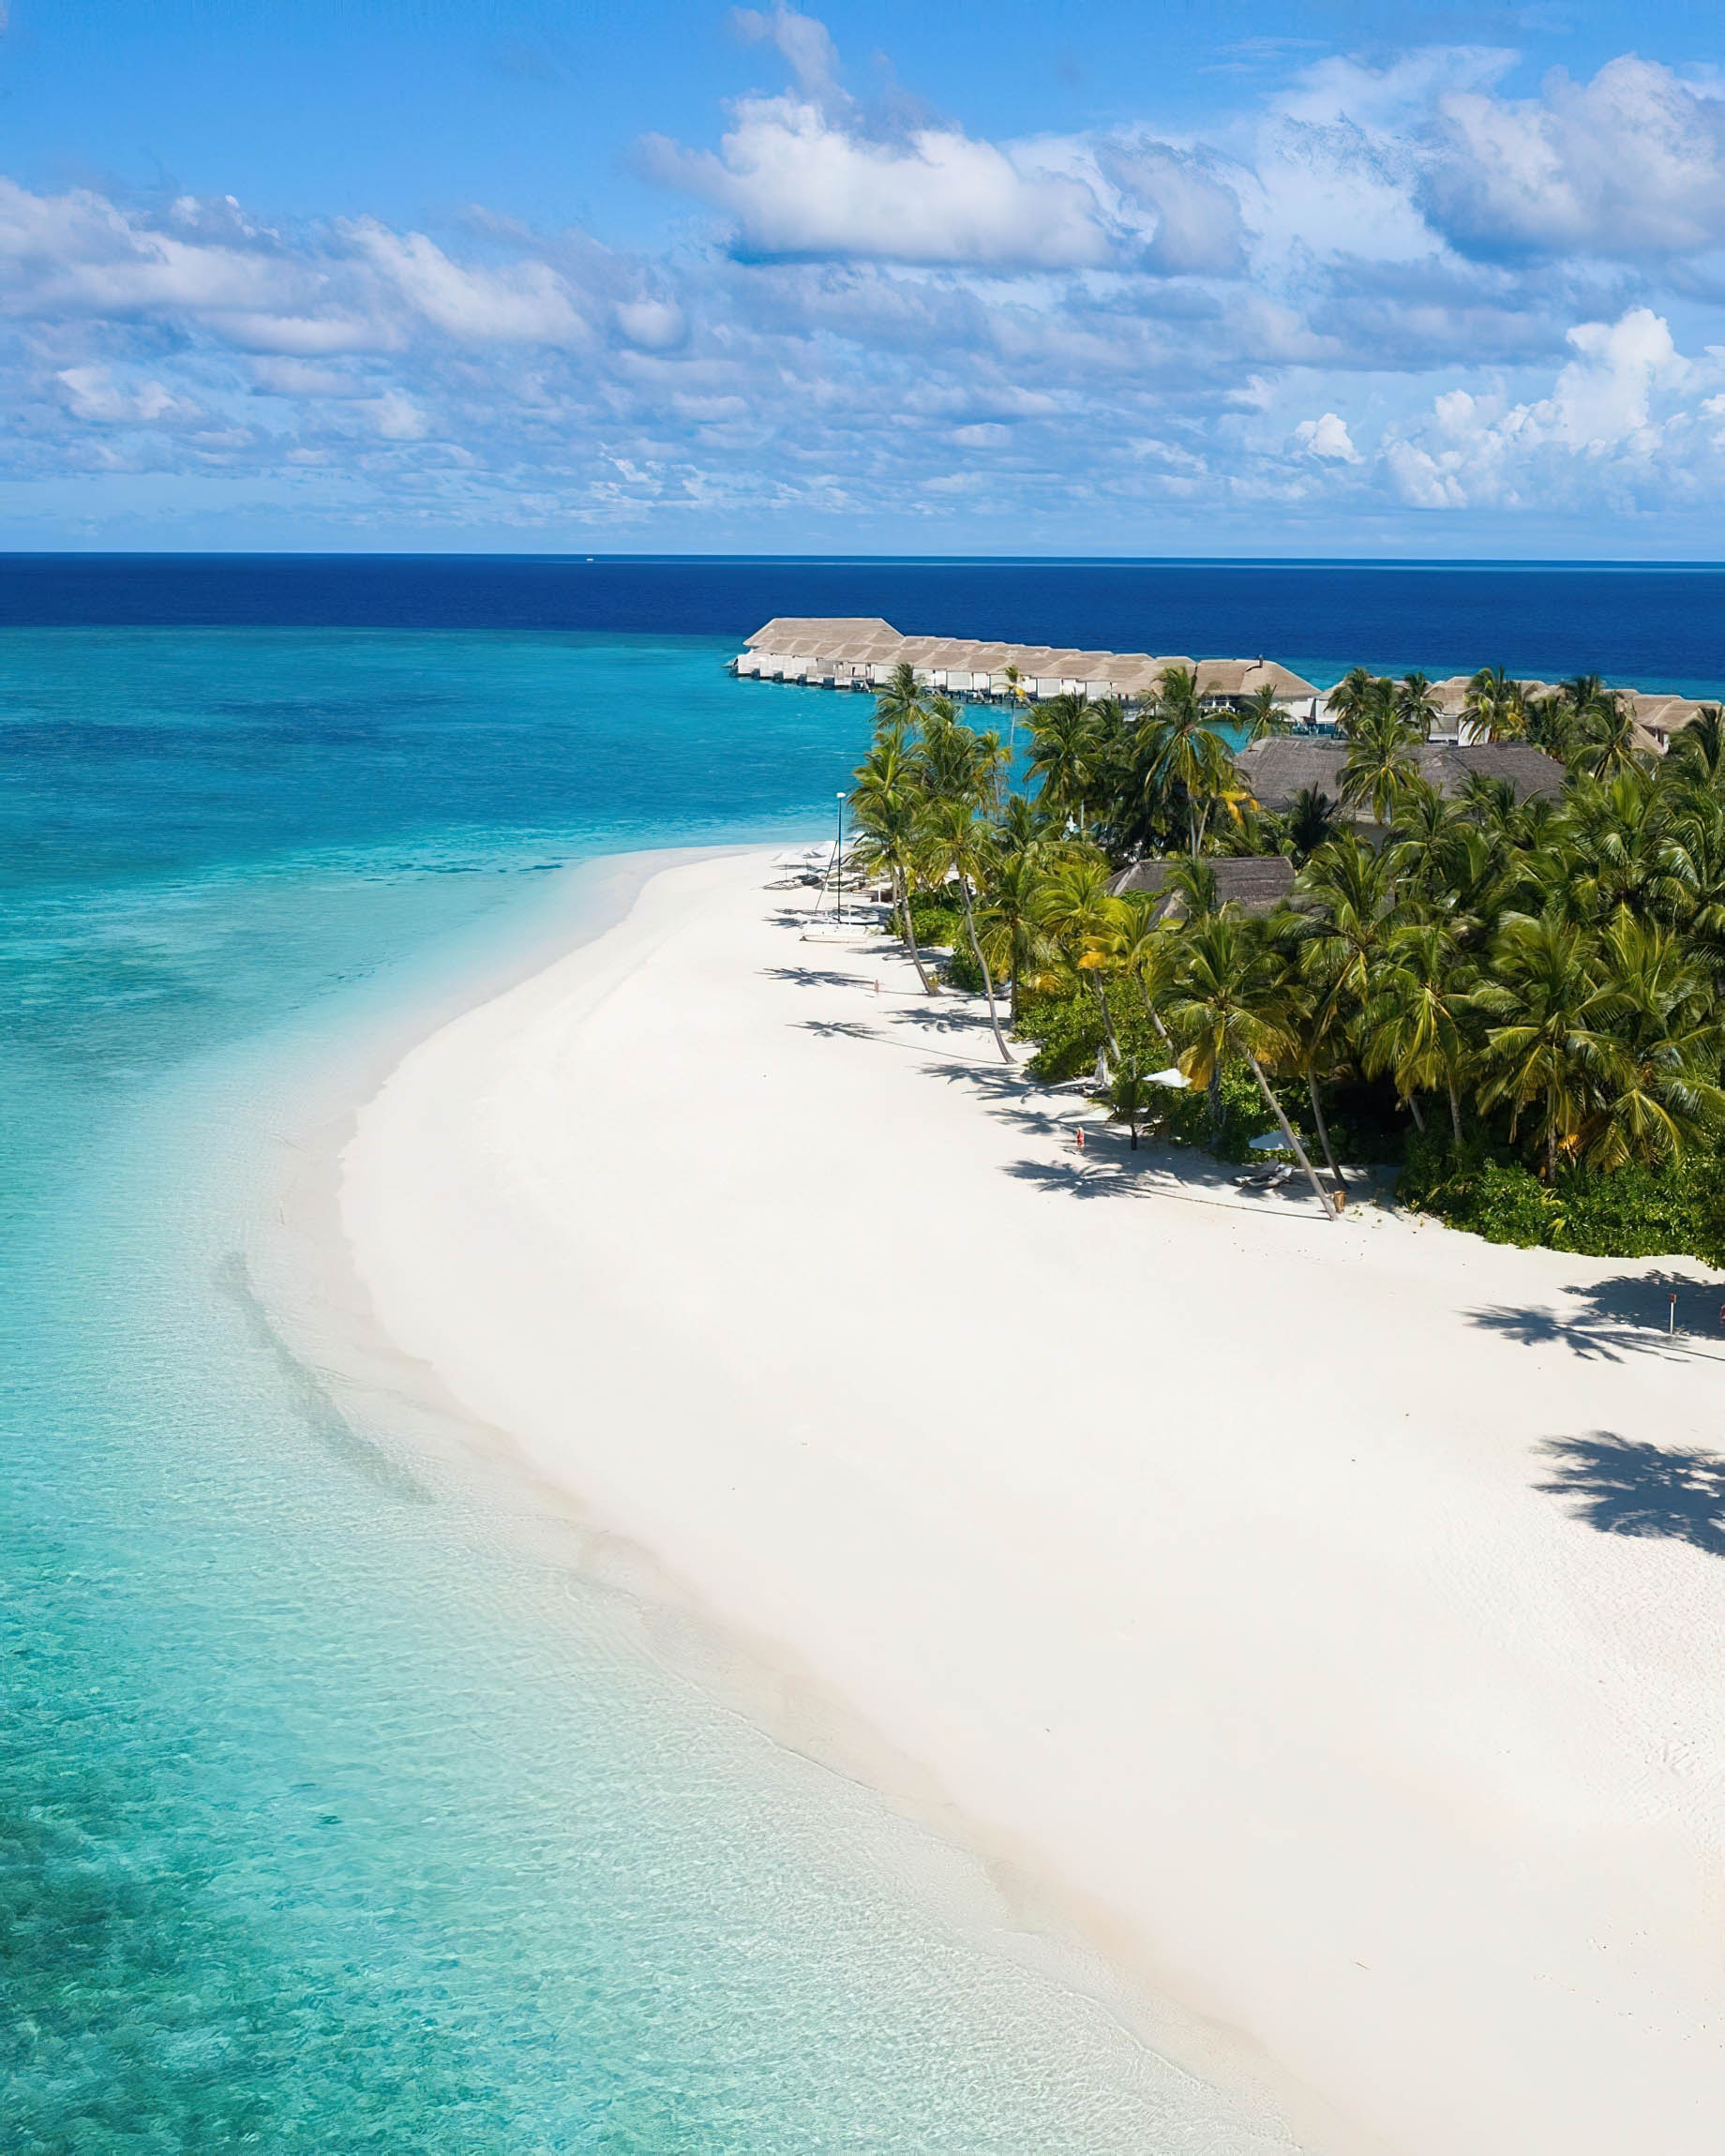 Baglioni Resort Maldives - Maagau Island, Rinbudhoo, Maldives - Beach Aerial View